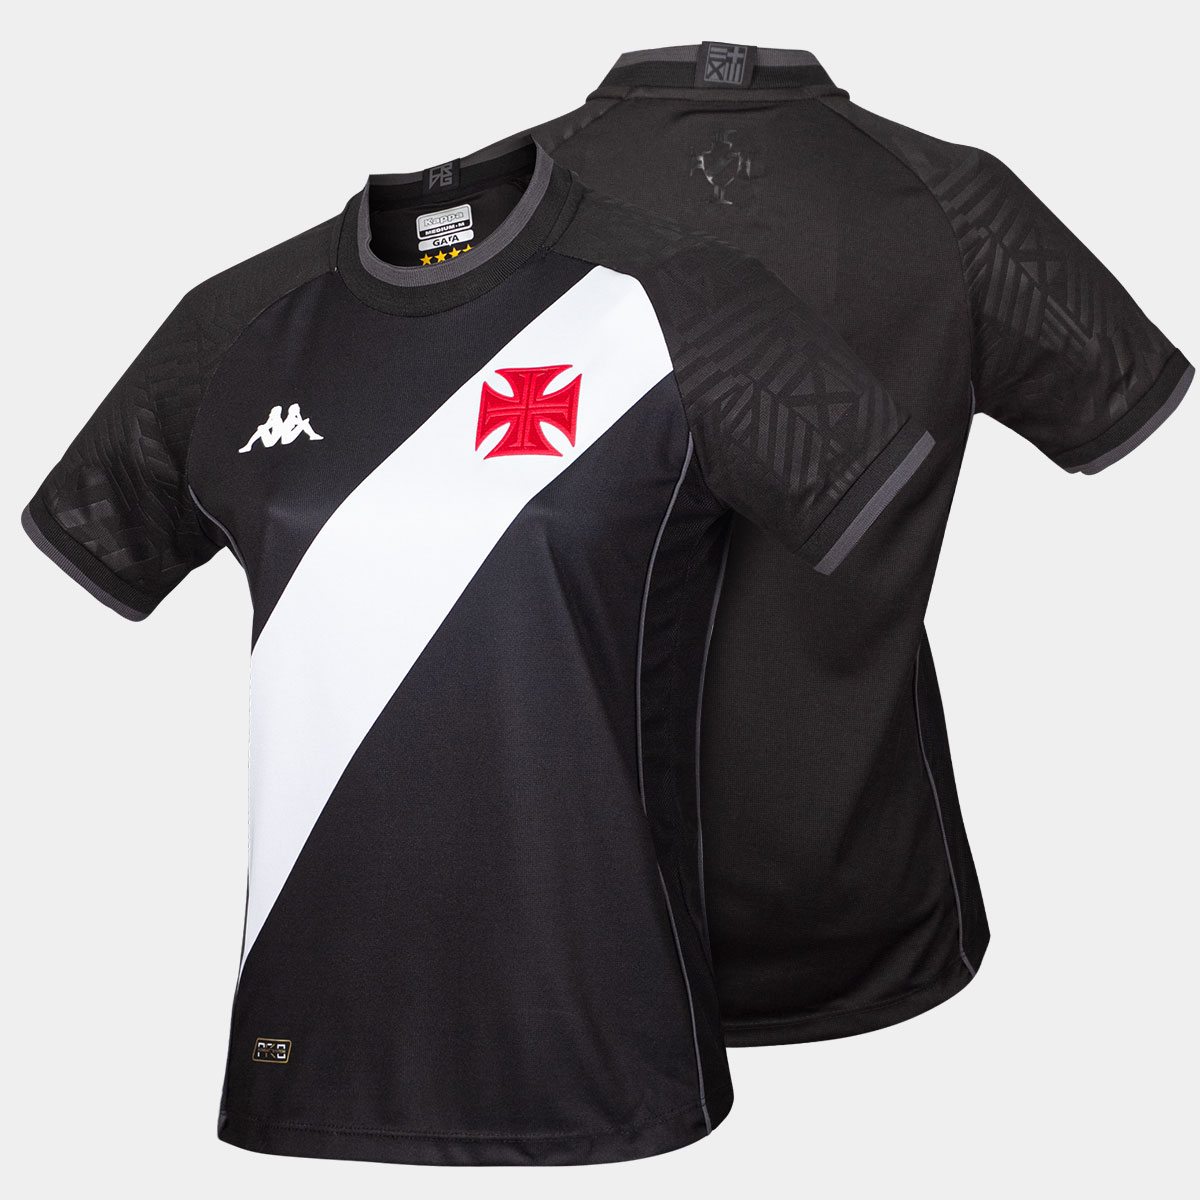 Camisa Vasco Of 1 Feminina KAPPA 2021